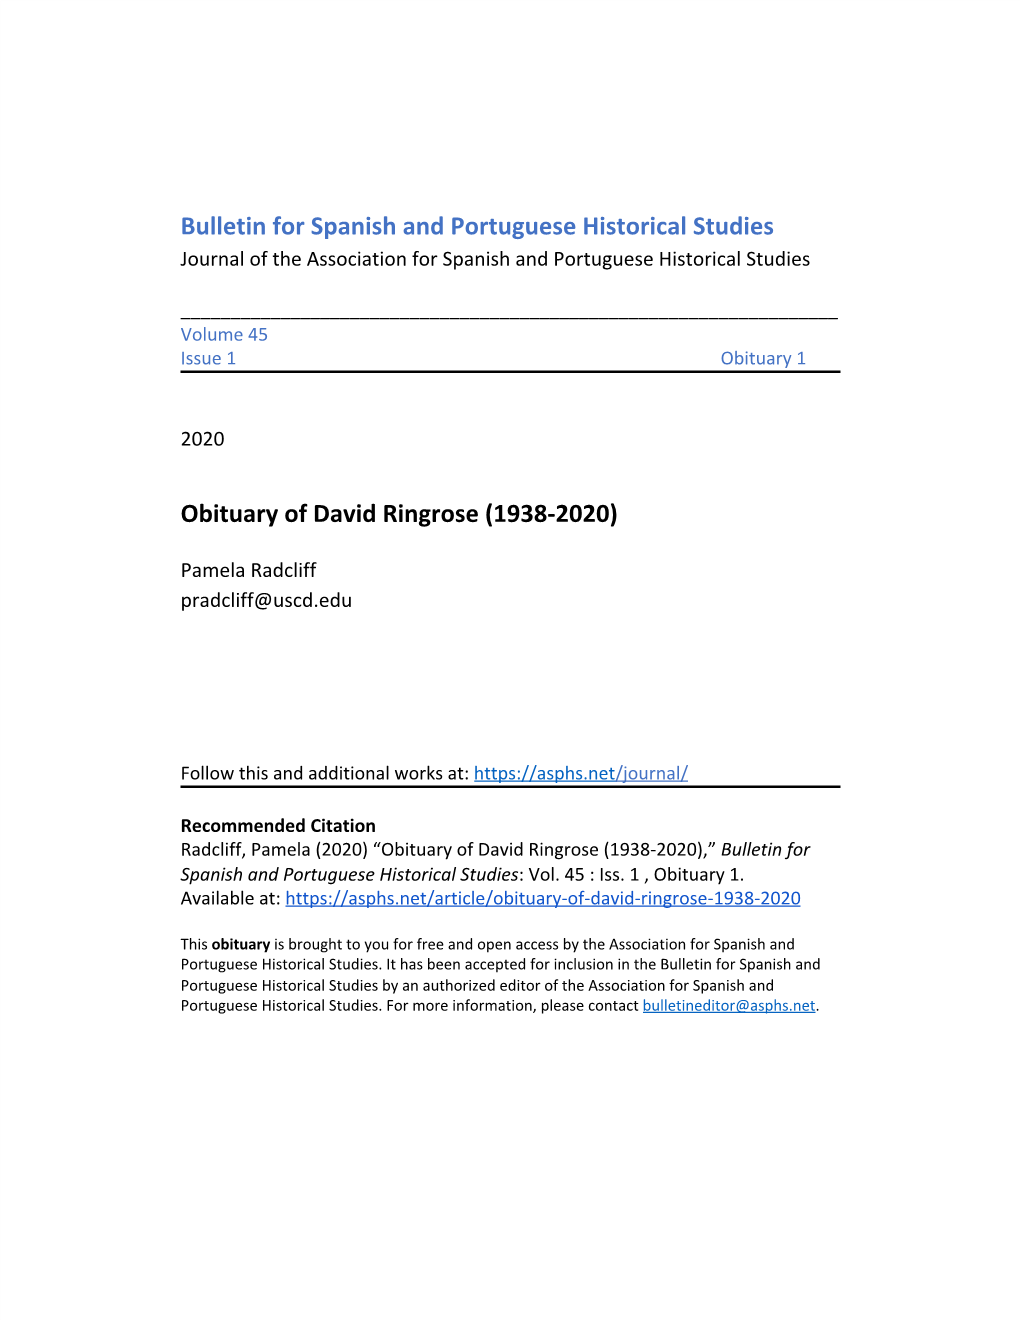 Bulletin for Spanish and Portuguese Historical Studies Obituary of David Ringrose (1938-2020)